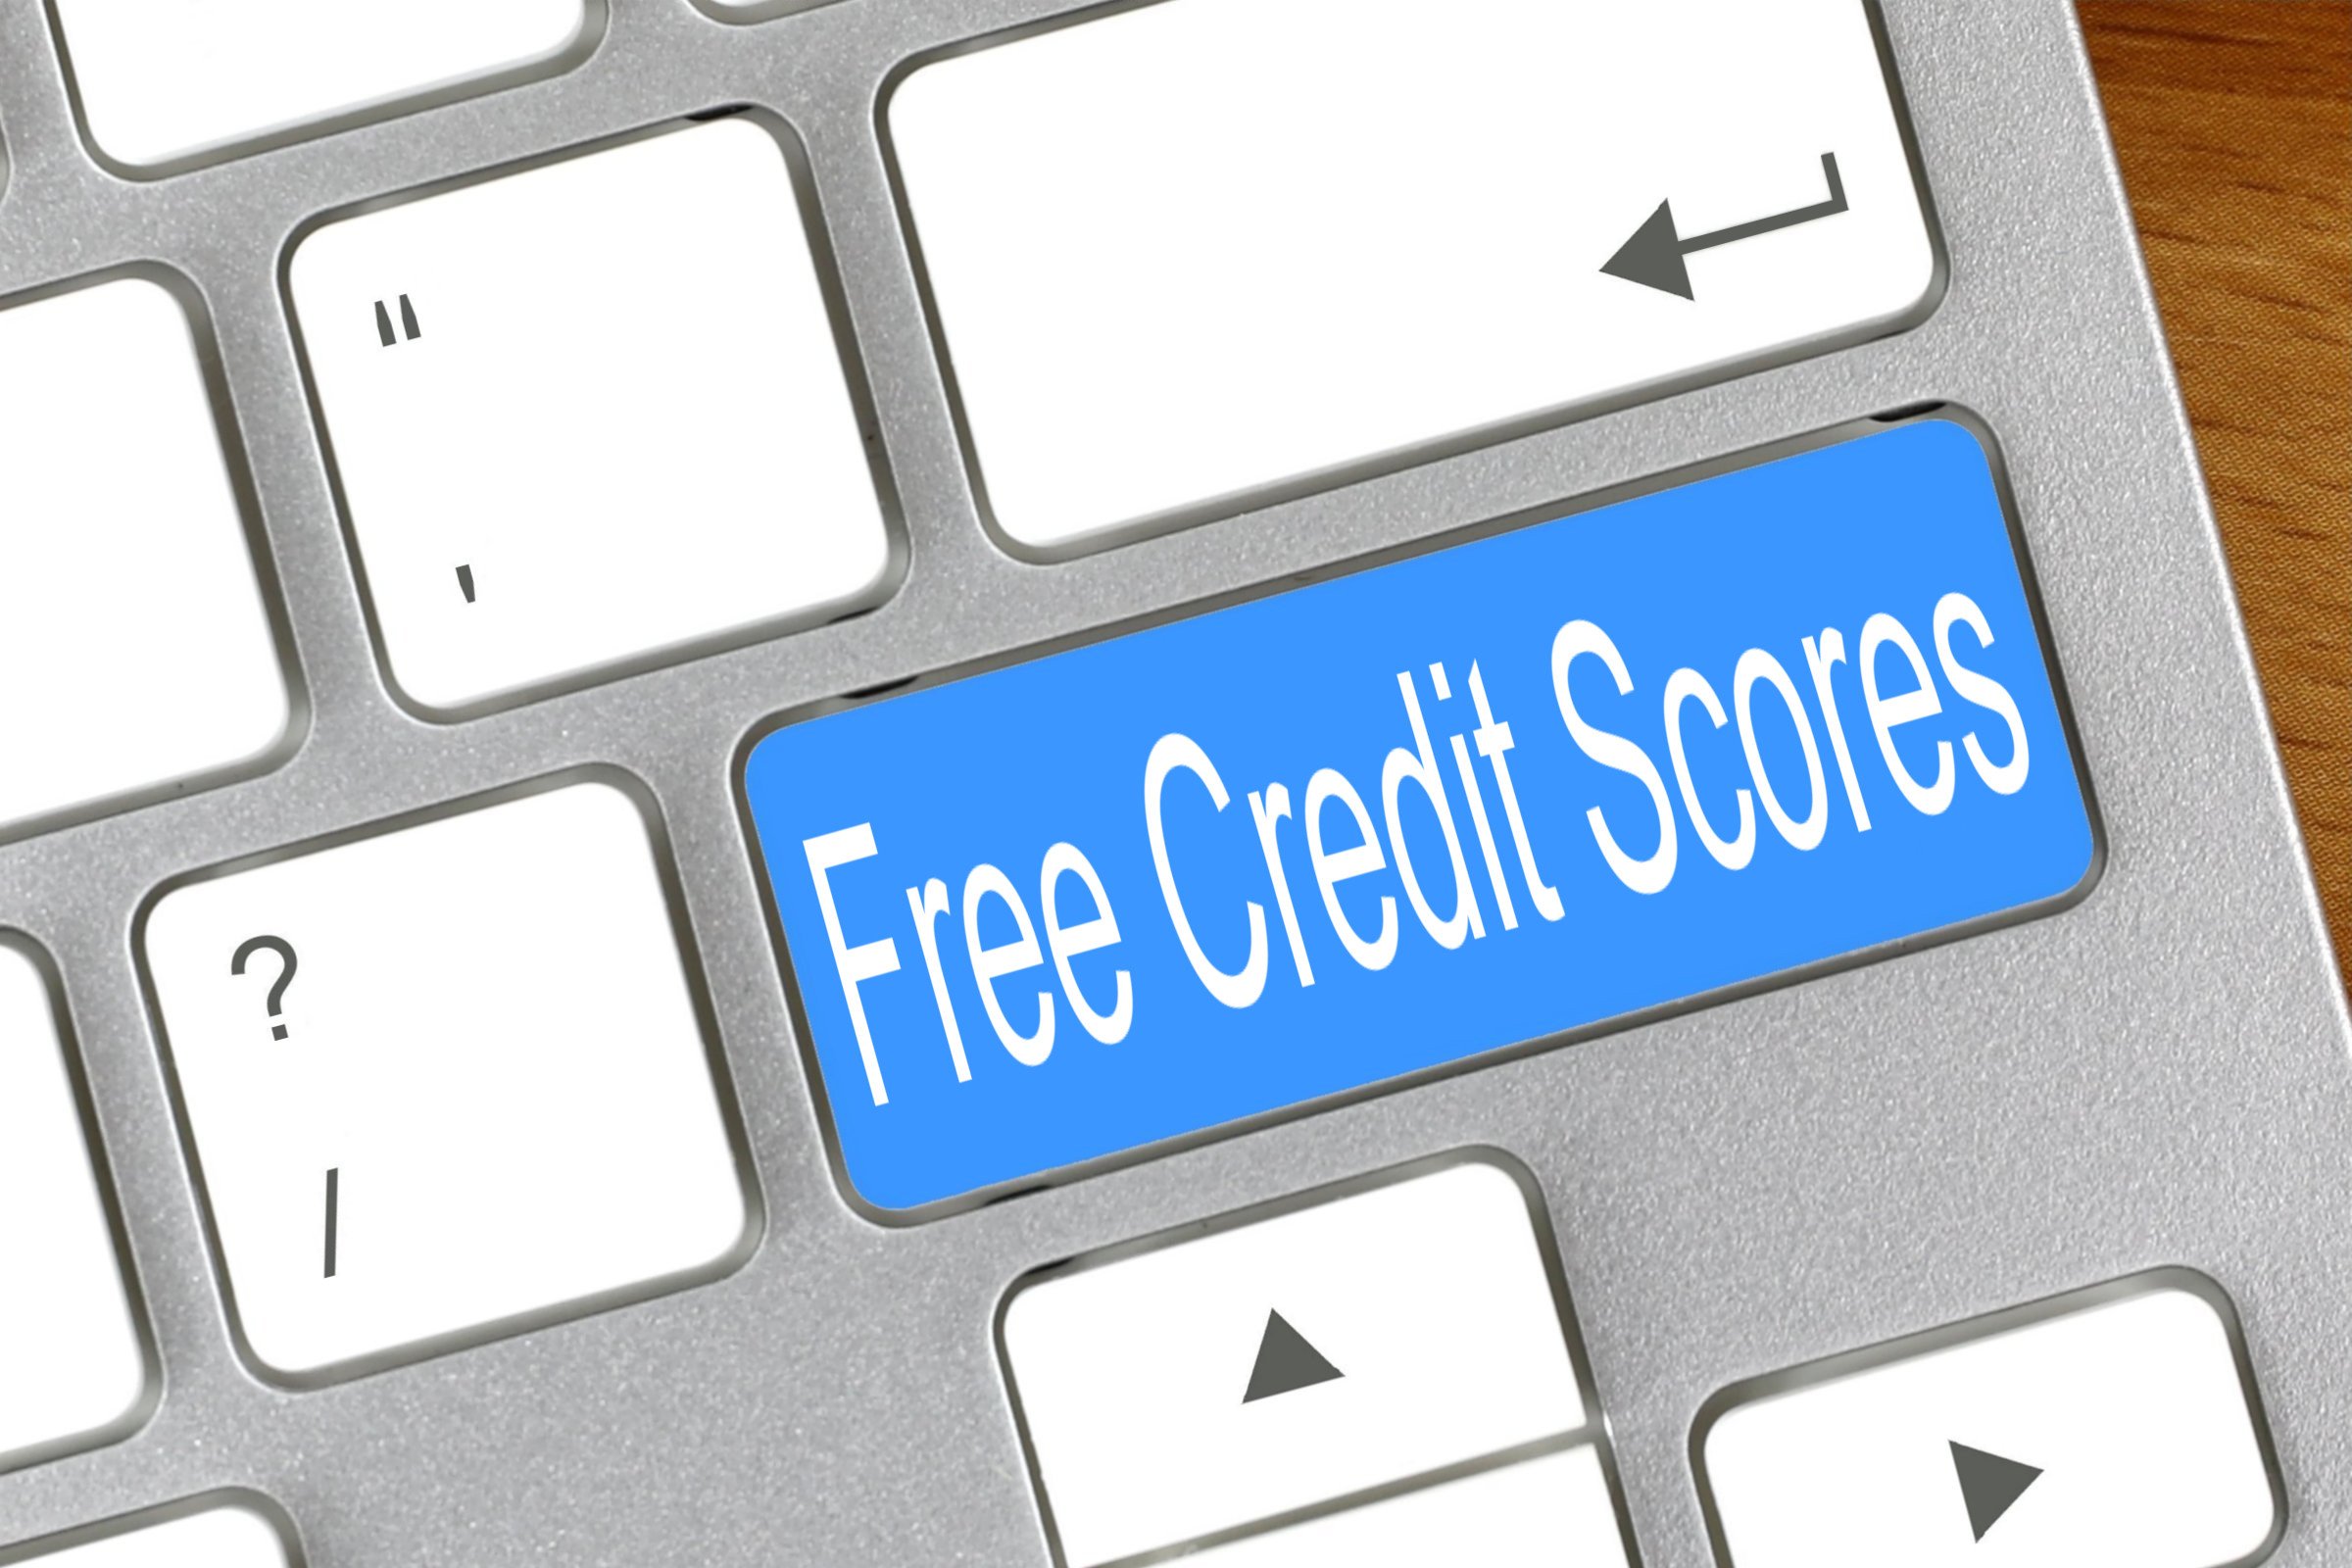 free credit scores